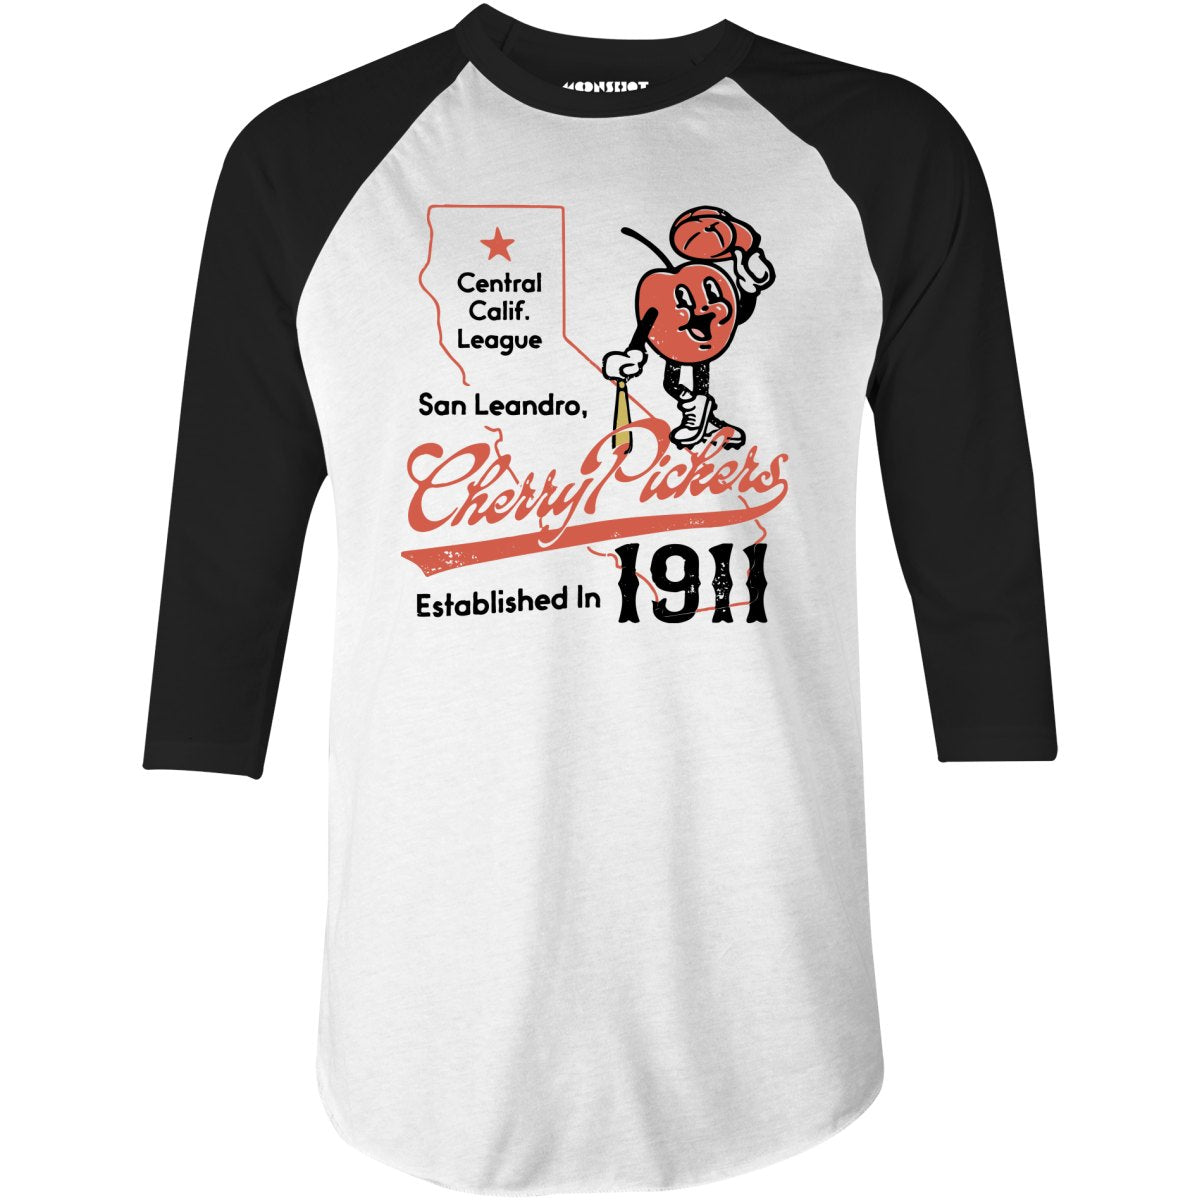 San Leandro Cherry Pickers - California - Vintage Defunct Baseball Teams - 3/4 Sleeve Raglan T-Shirt